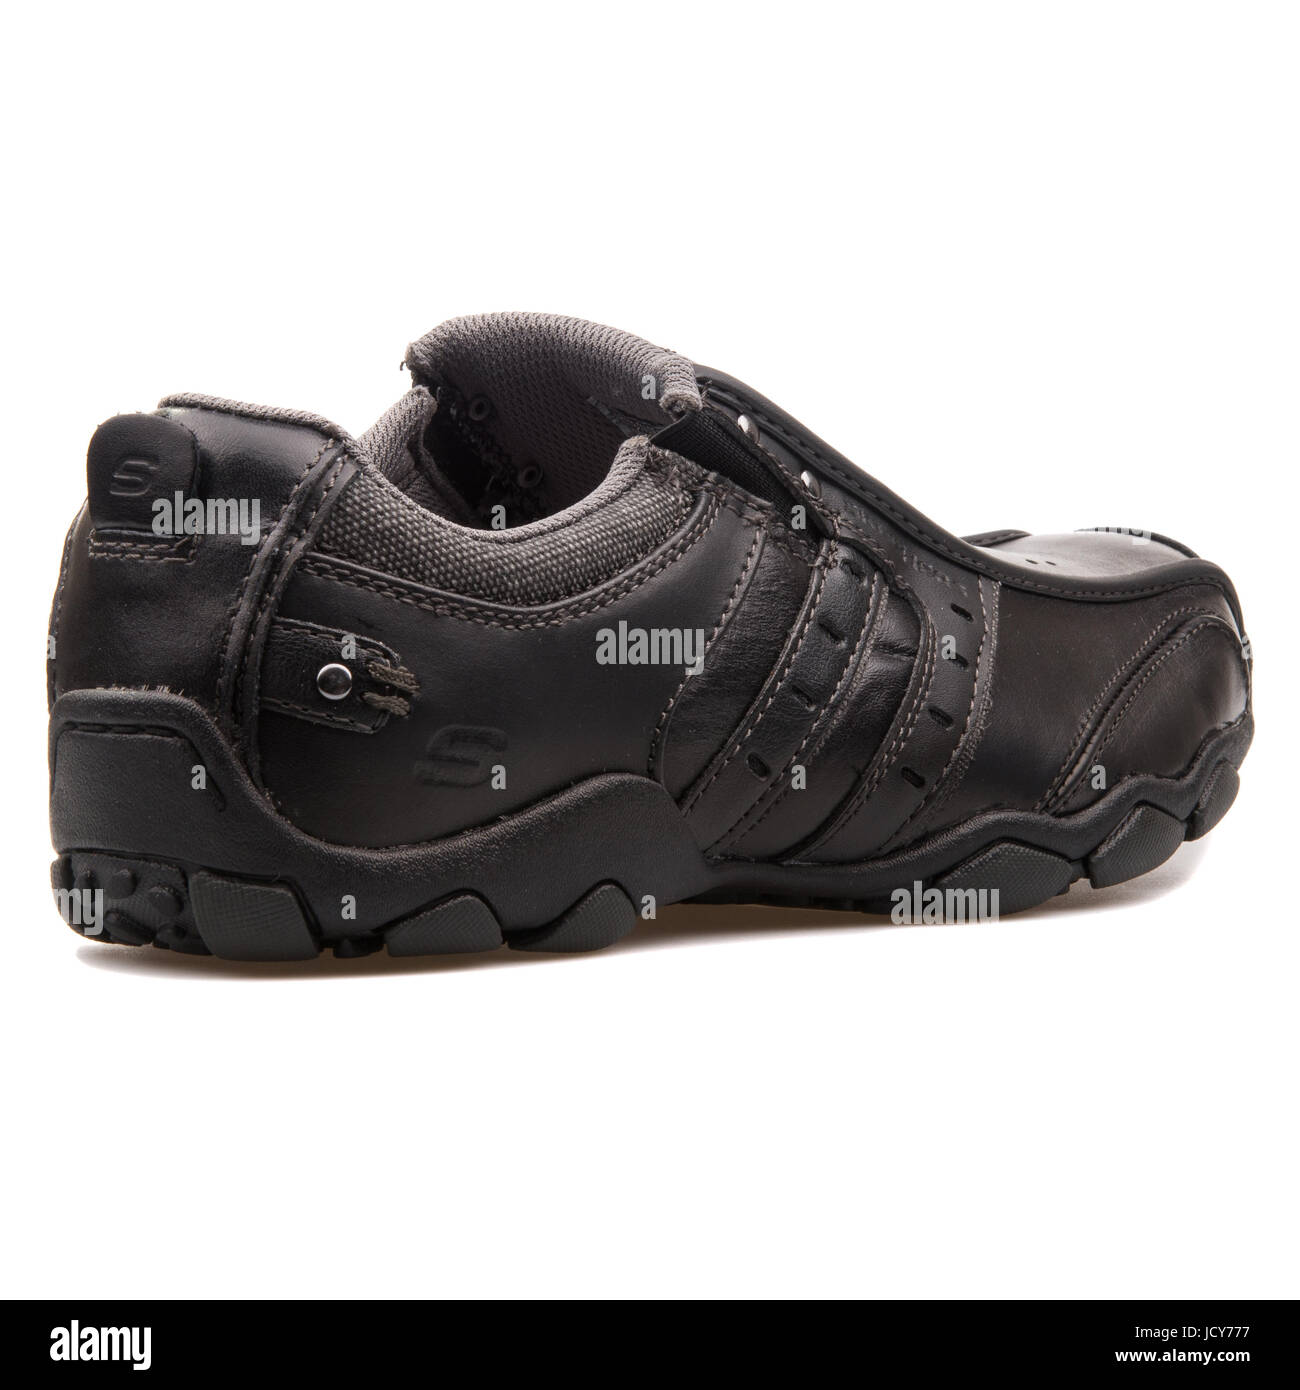 Skechers Diameter Black Leather Men's Shoes - 61779-BLK Stock Photo - Alamy